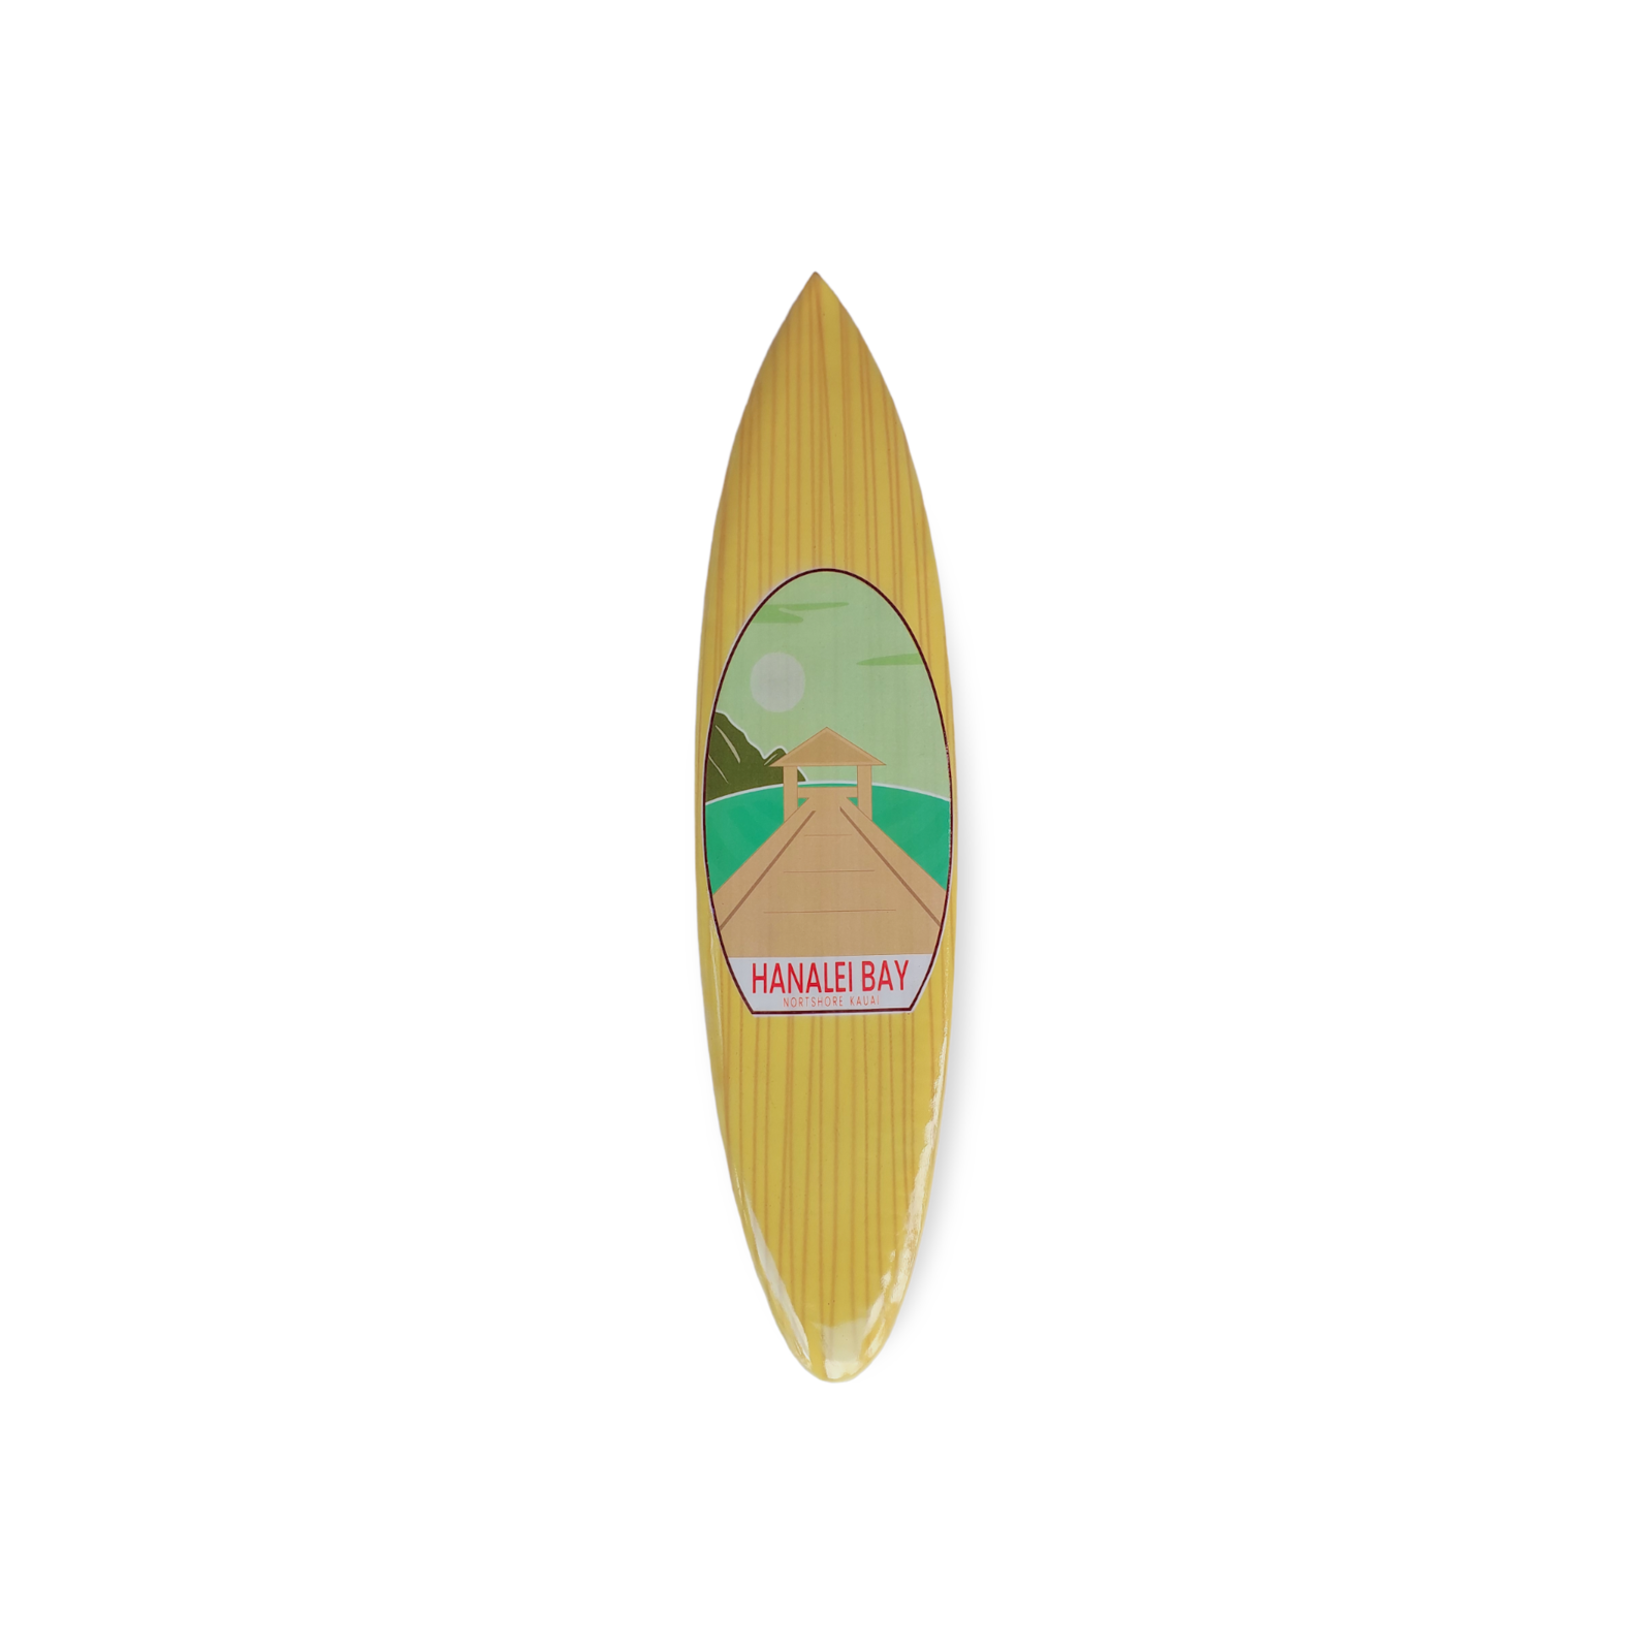 Airbrushed Wood Hanalei Bay Kauai Surfboard Small #7AB